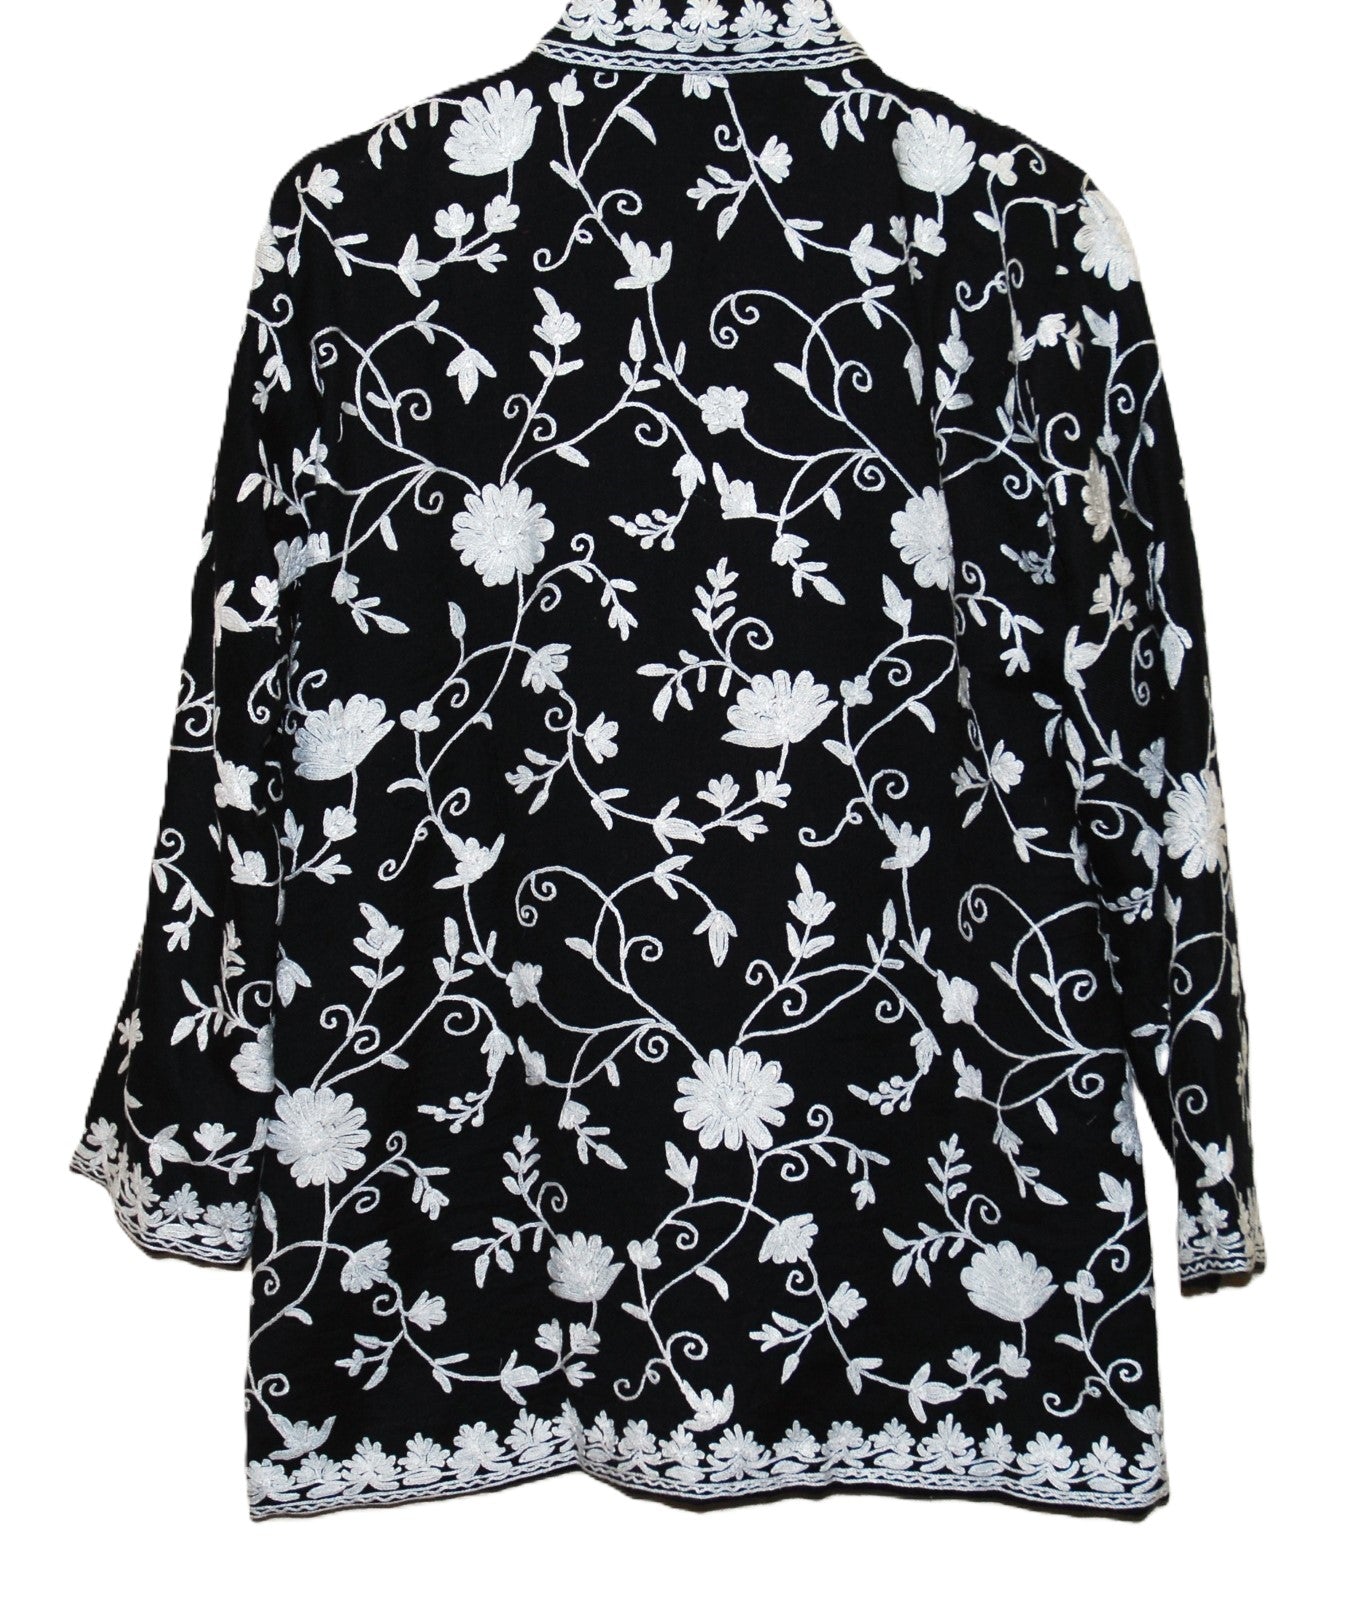 Floral Embroidery Kashmiri Woolen Jacket, White on Black #AO-056